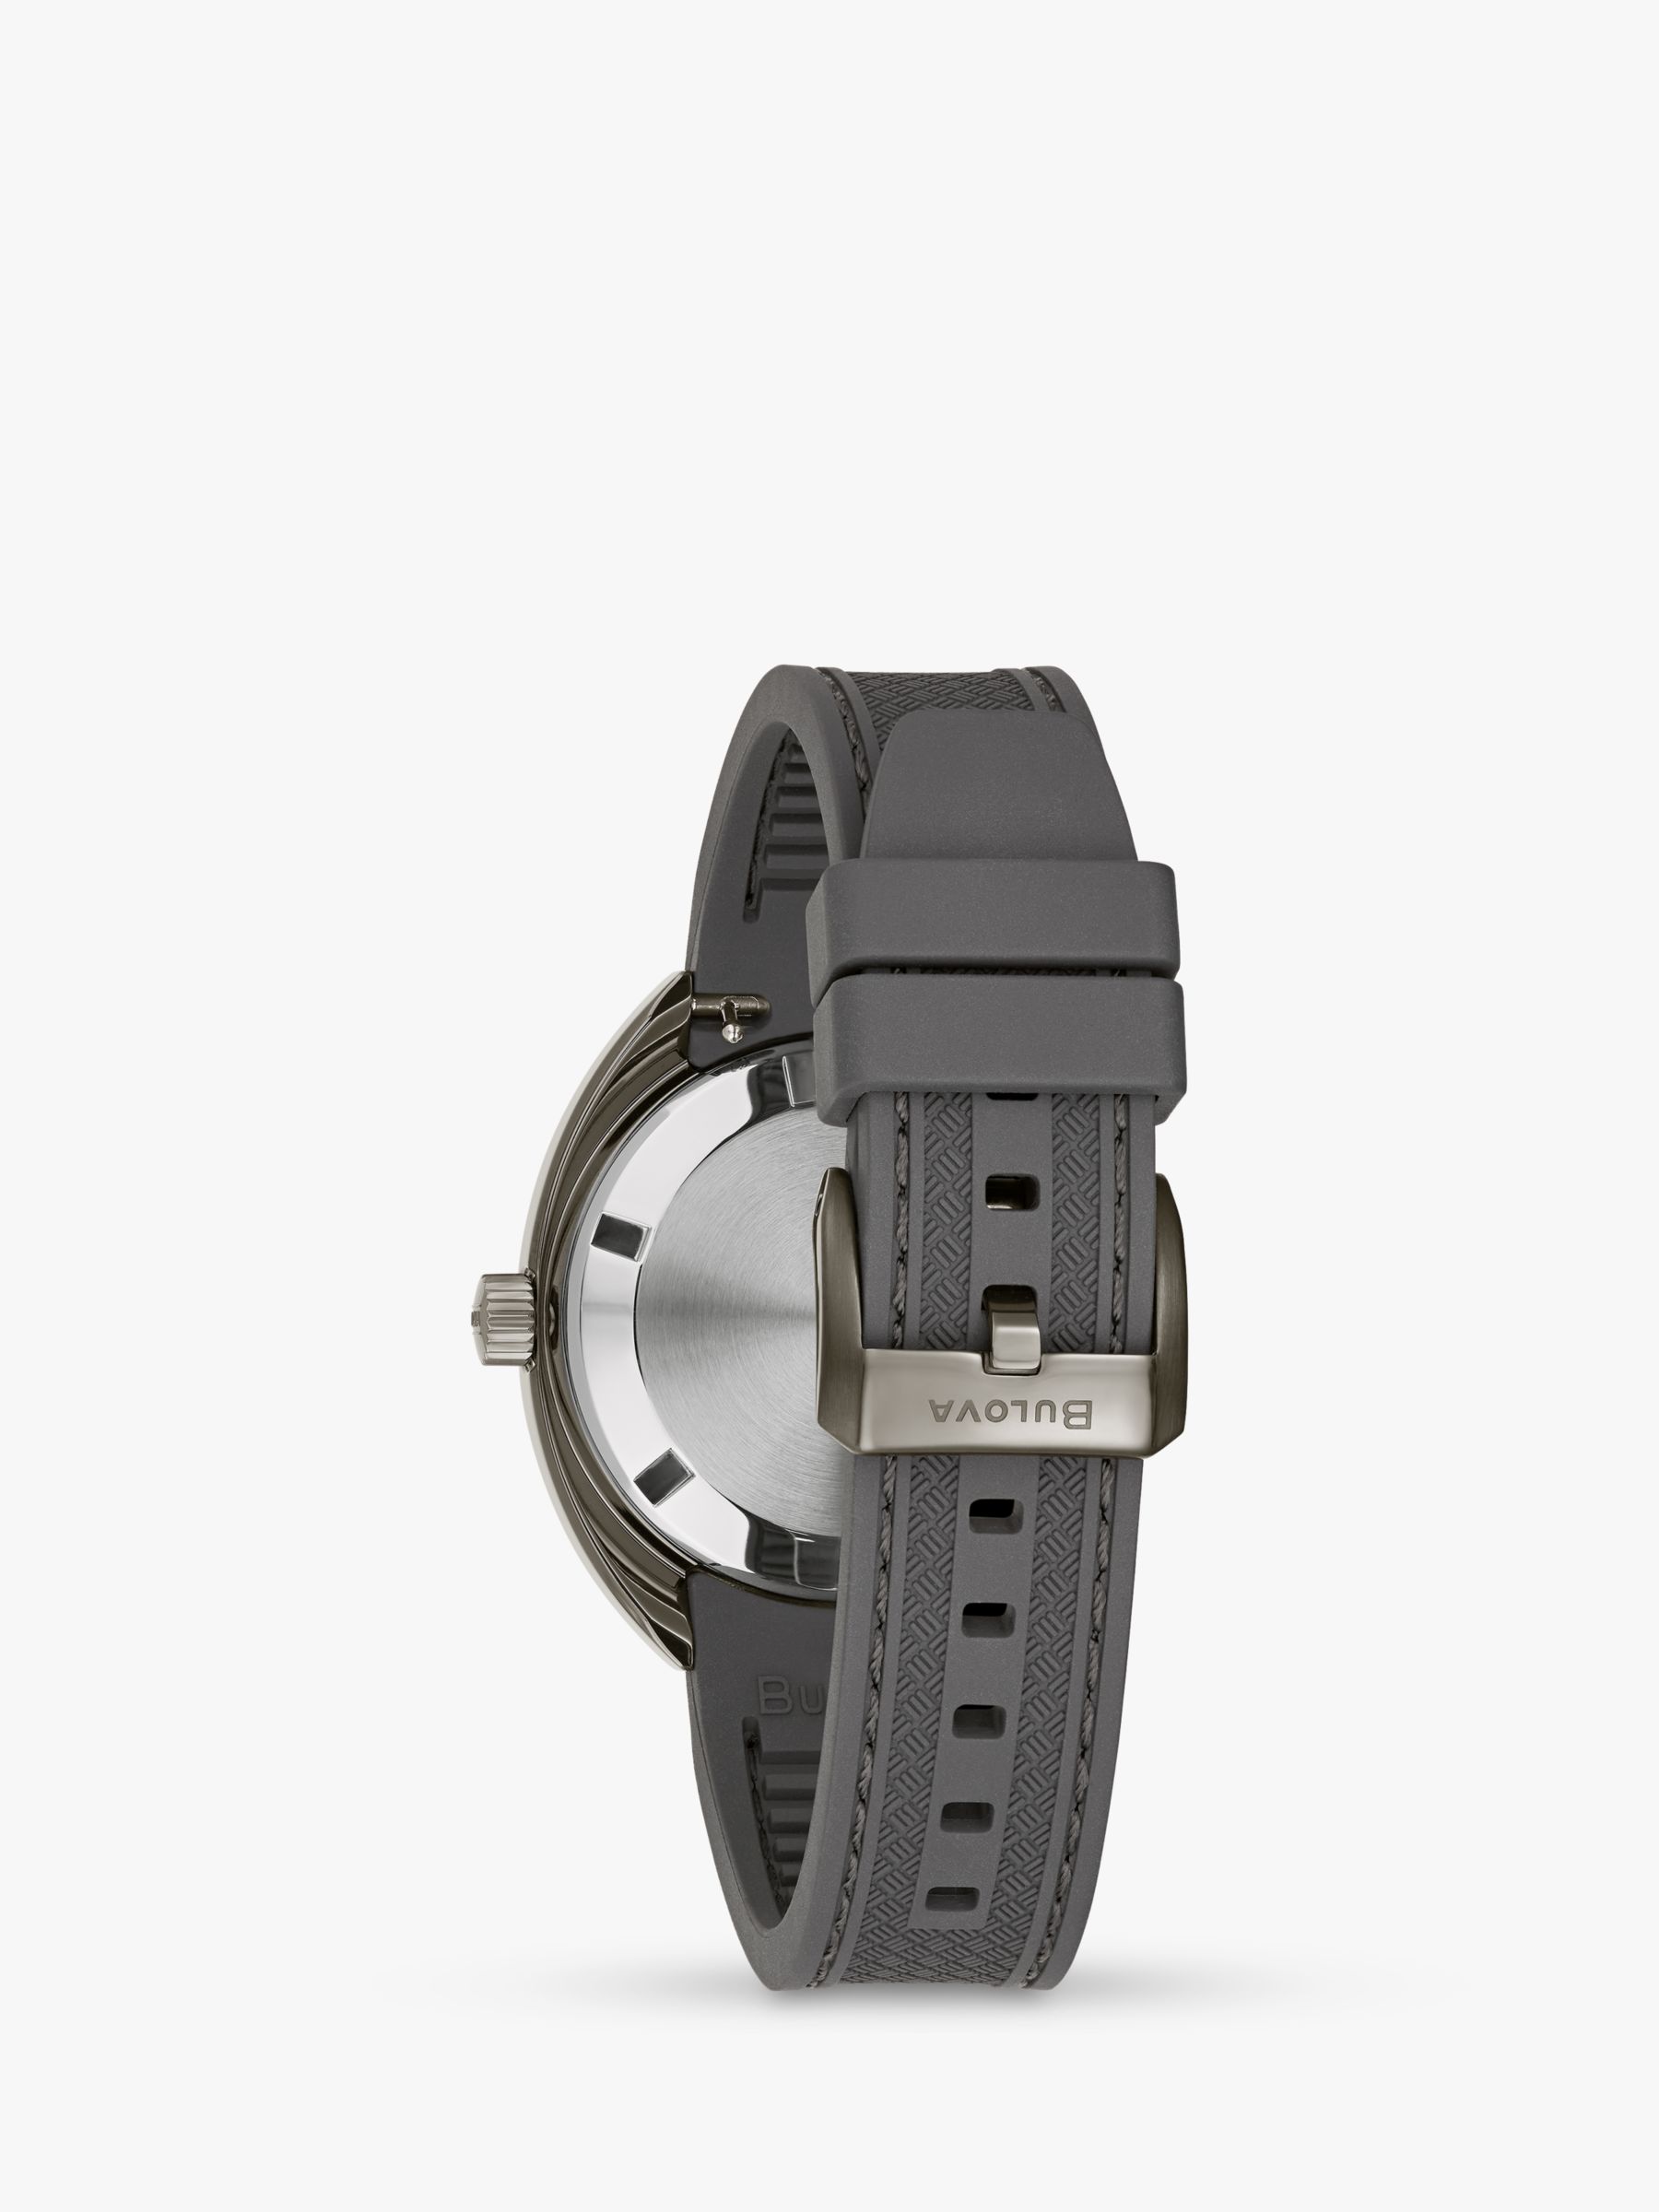 Buy Bulova 98B407 Men's Oceanographer Silicone Strap Watch, Grey Online at johnlewis.com